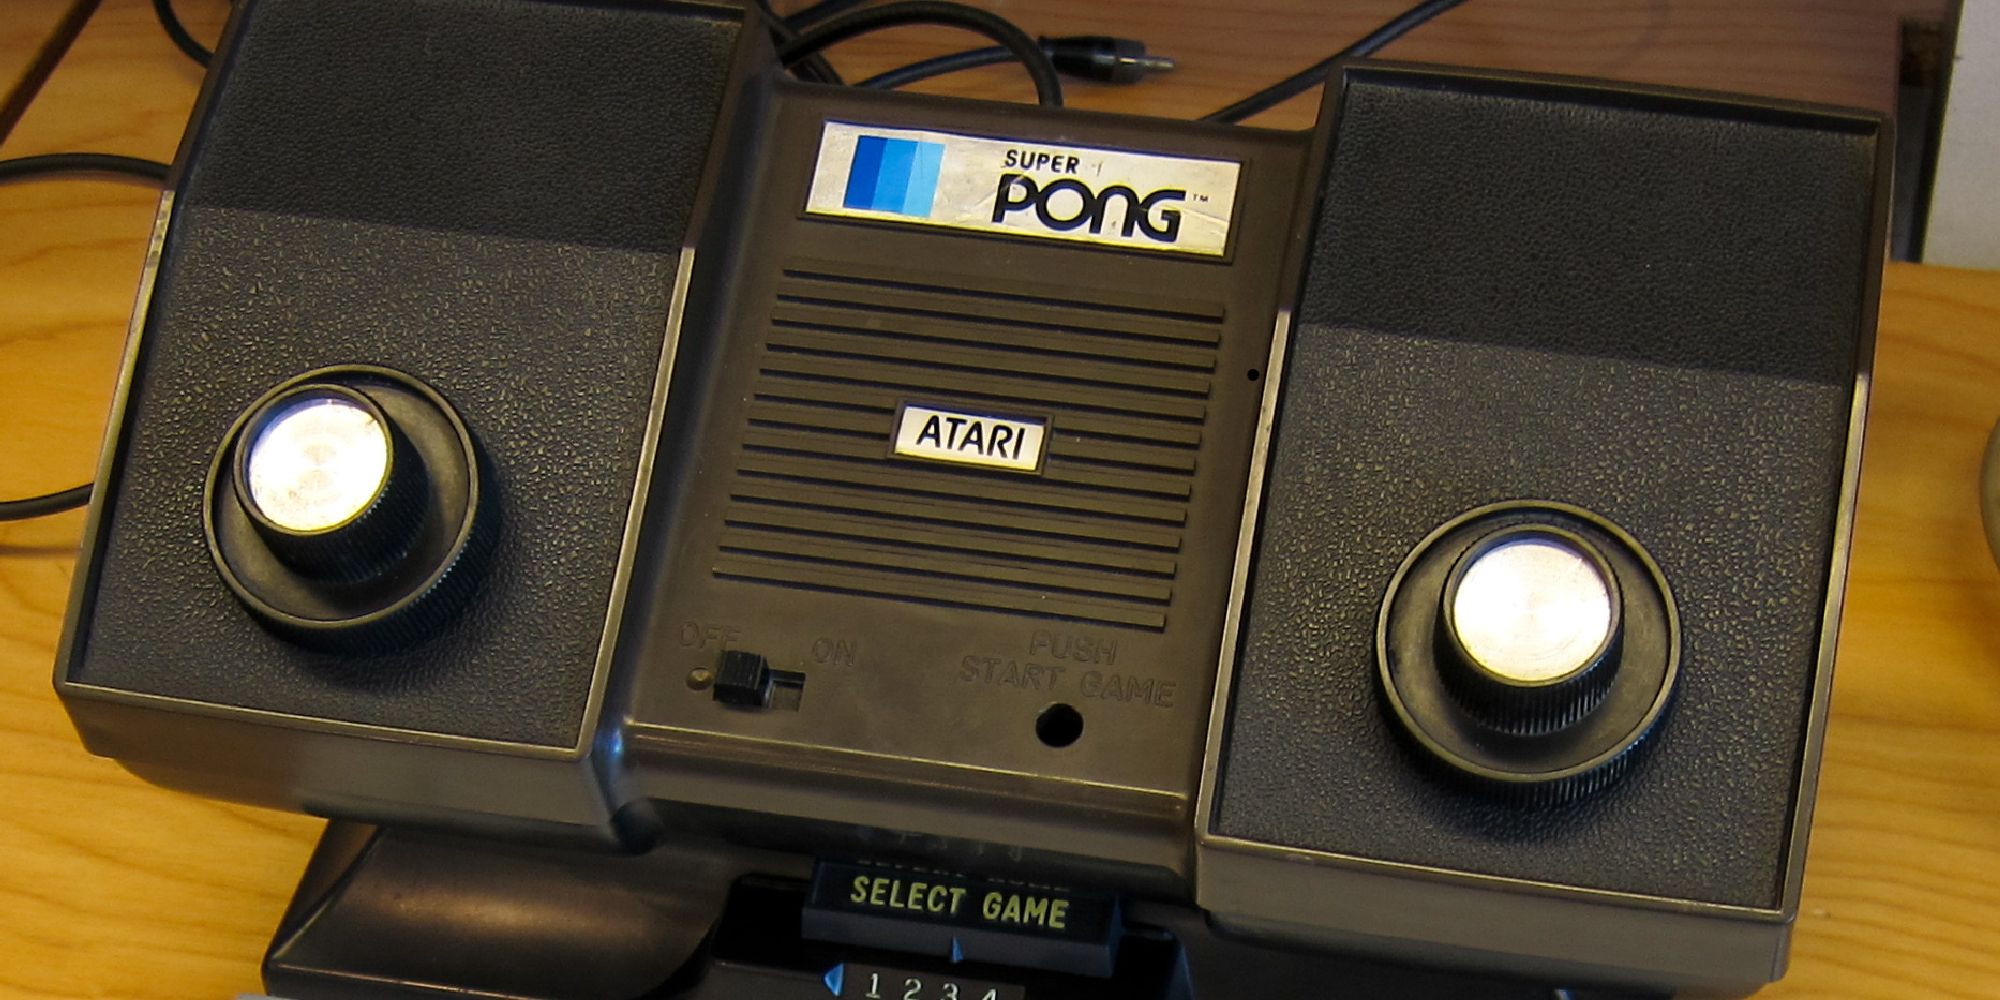 Atari's Super Pong home console